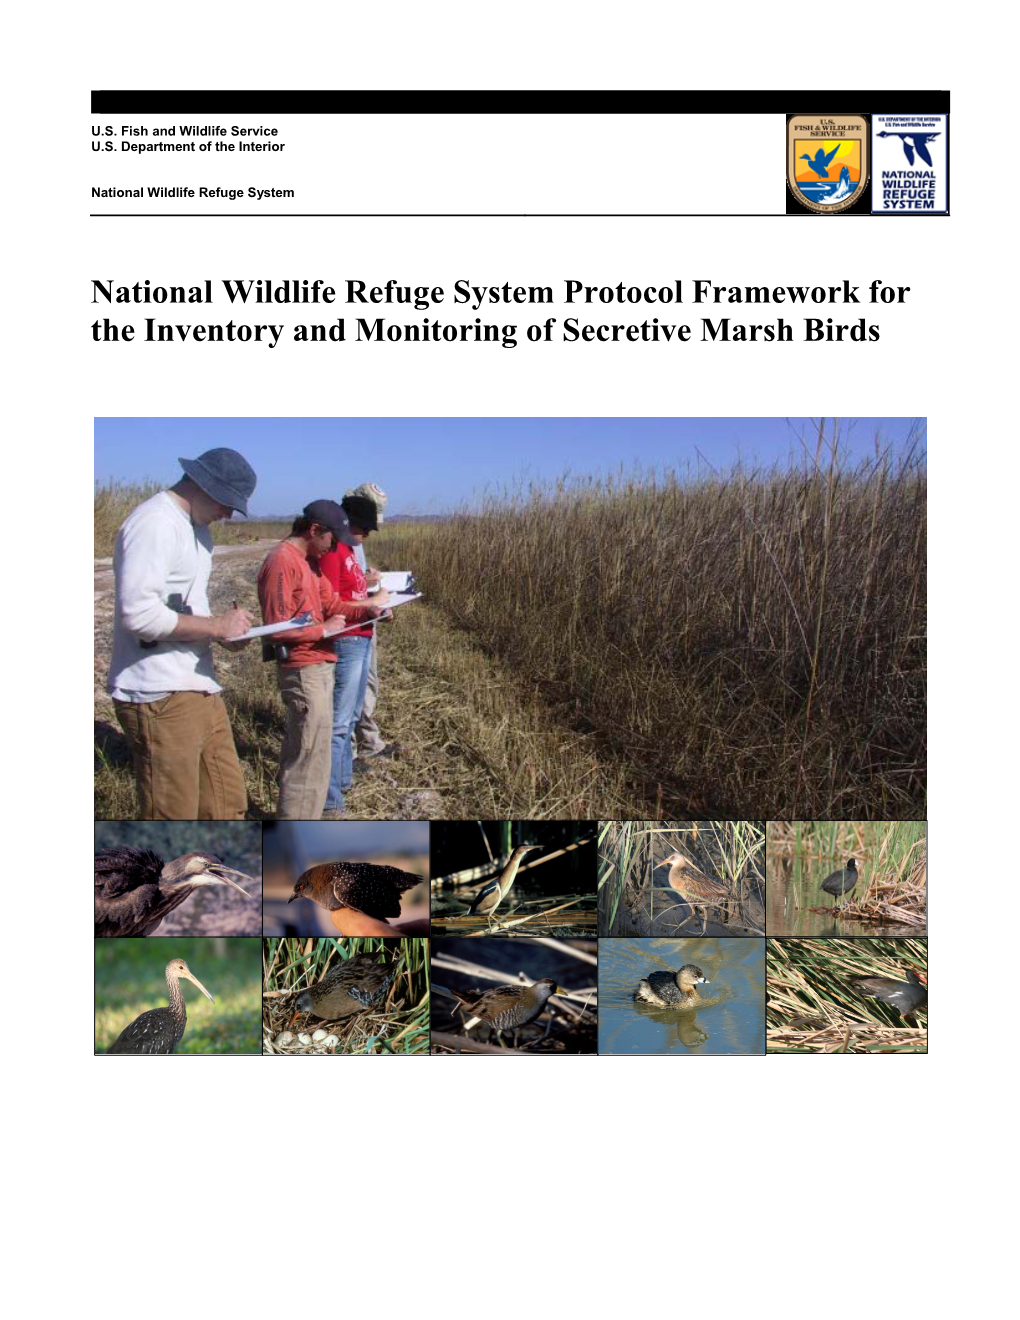 National Wildlife Refuge System Protocol Framework for the Inventory and Monitoring of Secretive Marsh Birds